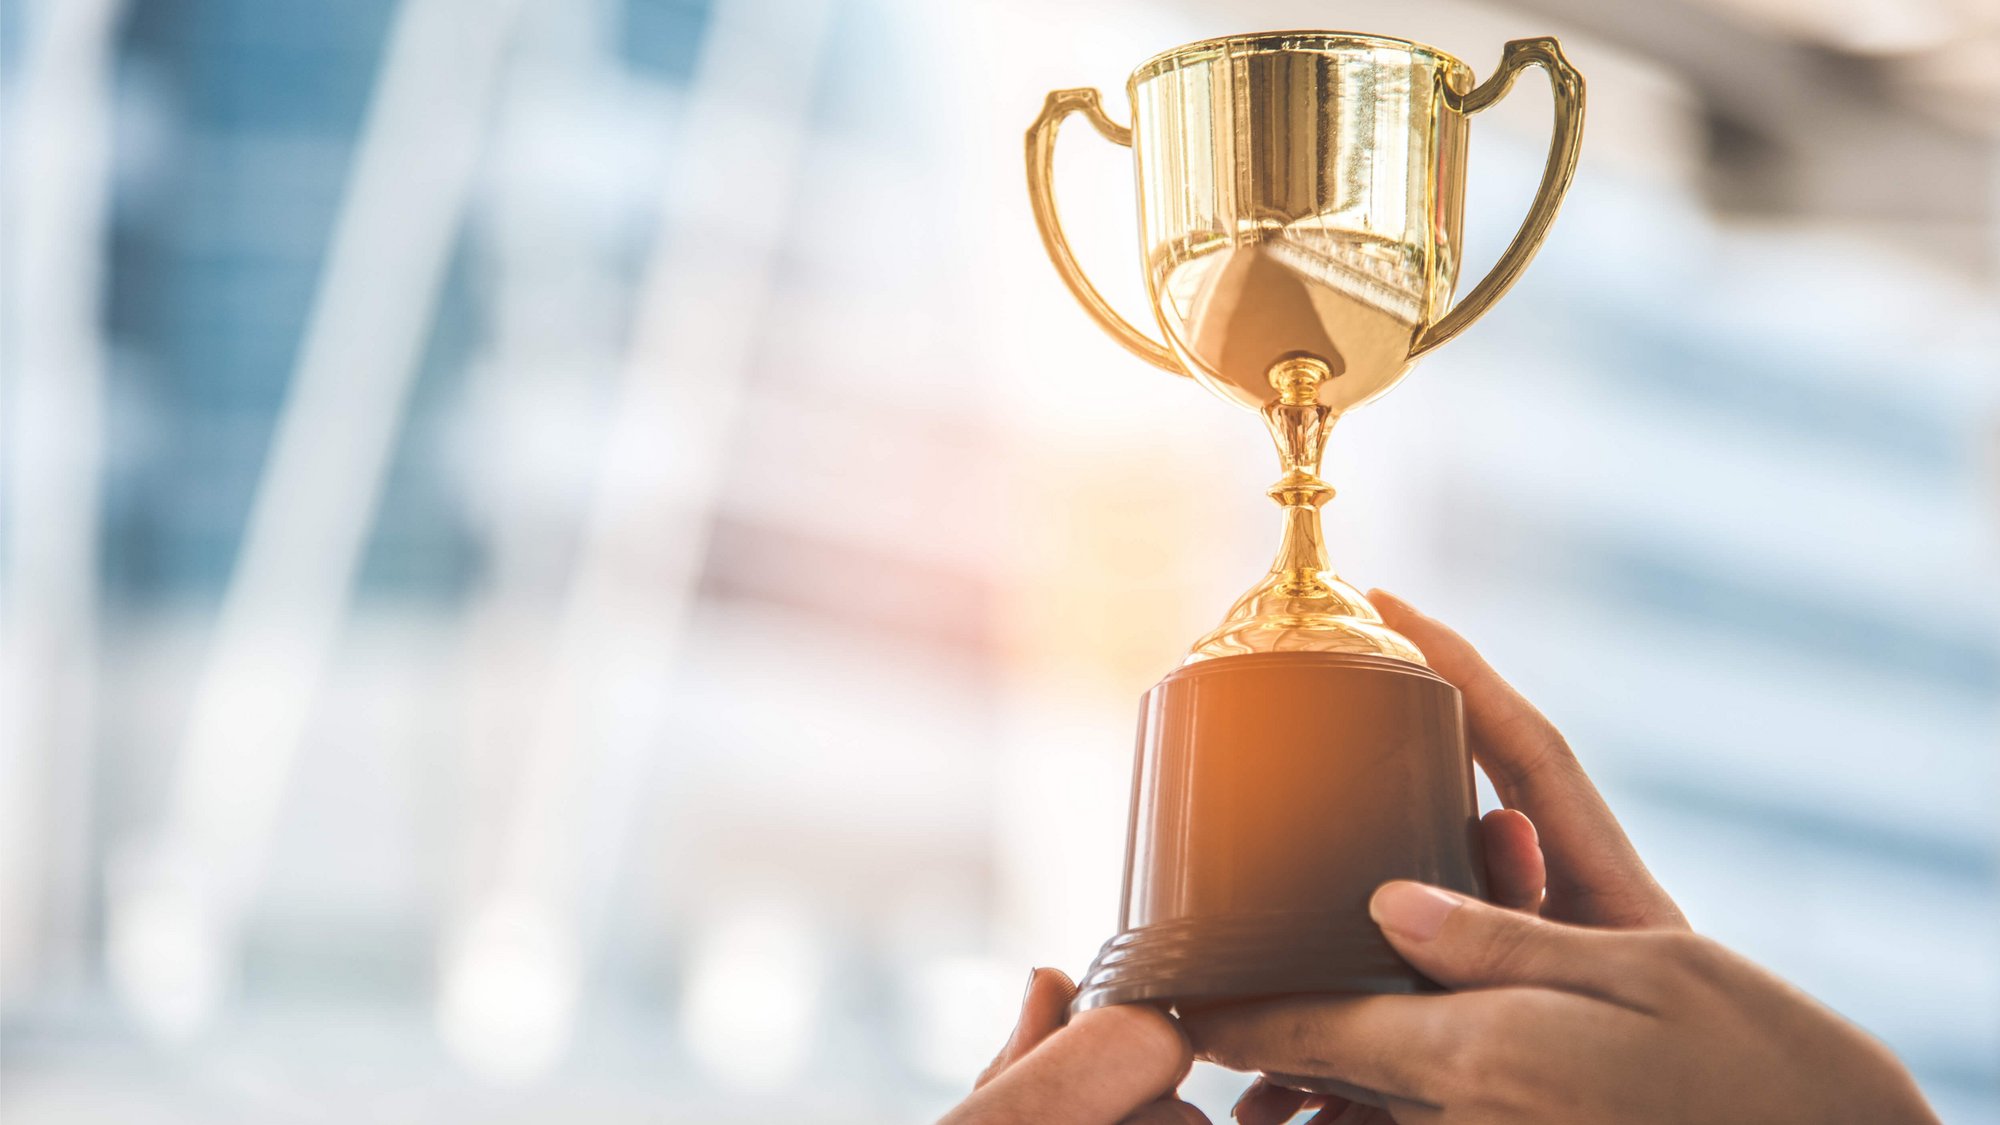 InCore gratuliert den Siegern des BILANZ Private-Banking-Rating 2019